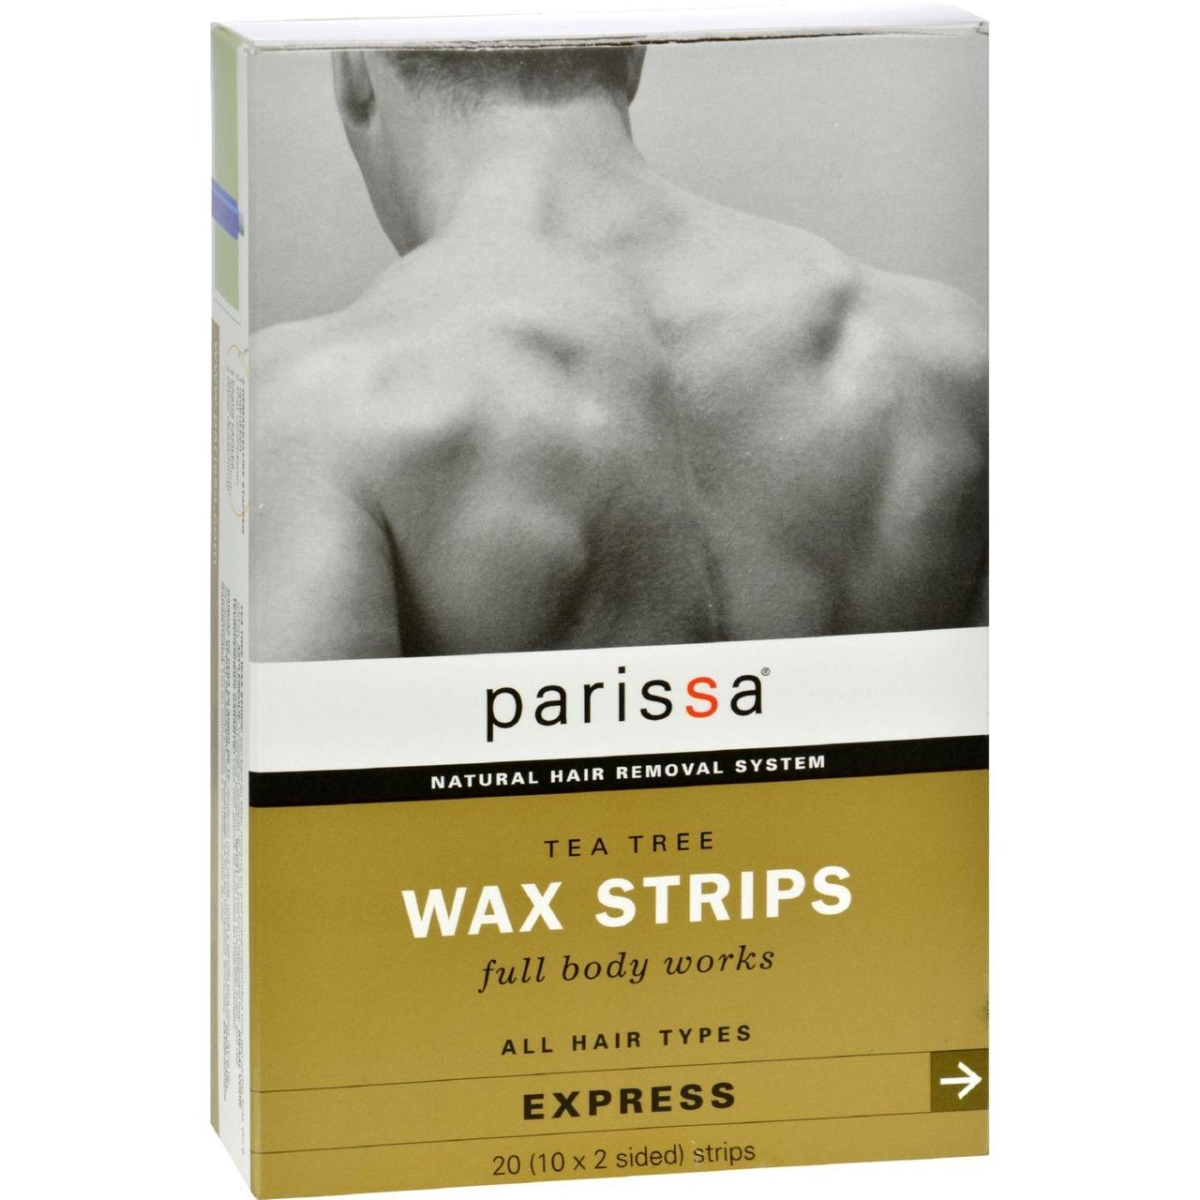 Hg0522094 Mens Tea Tree Wax Strips - 20 Strips